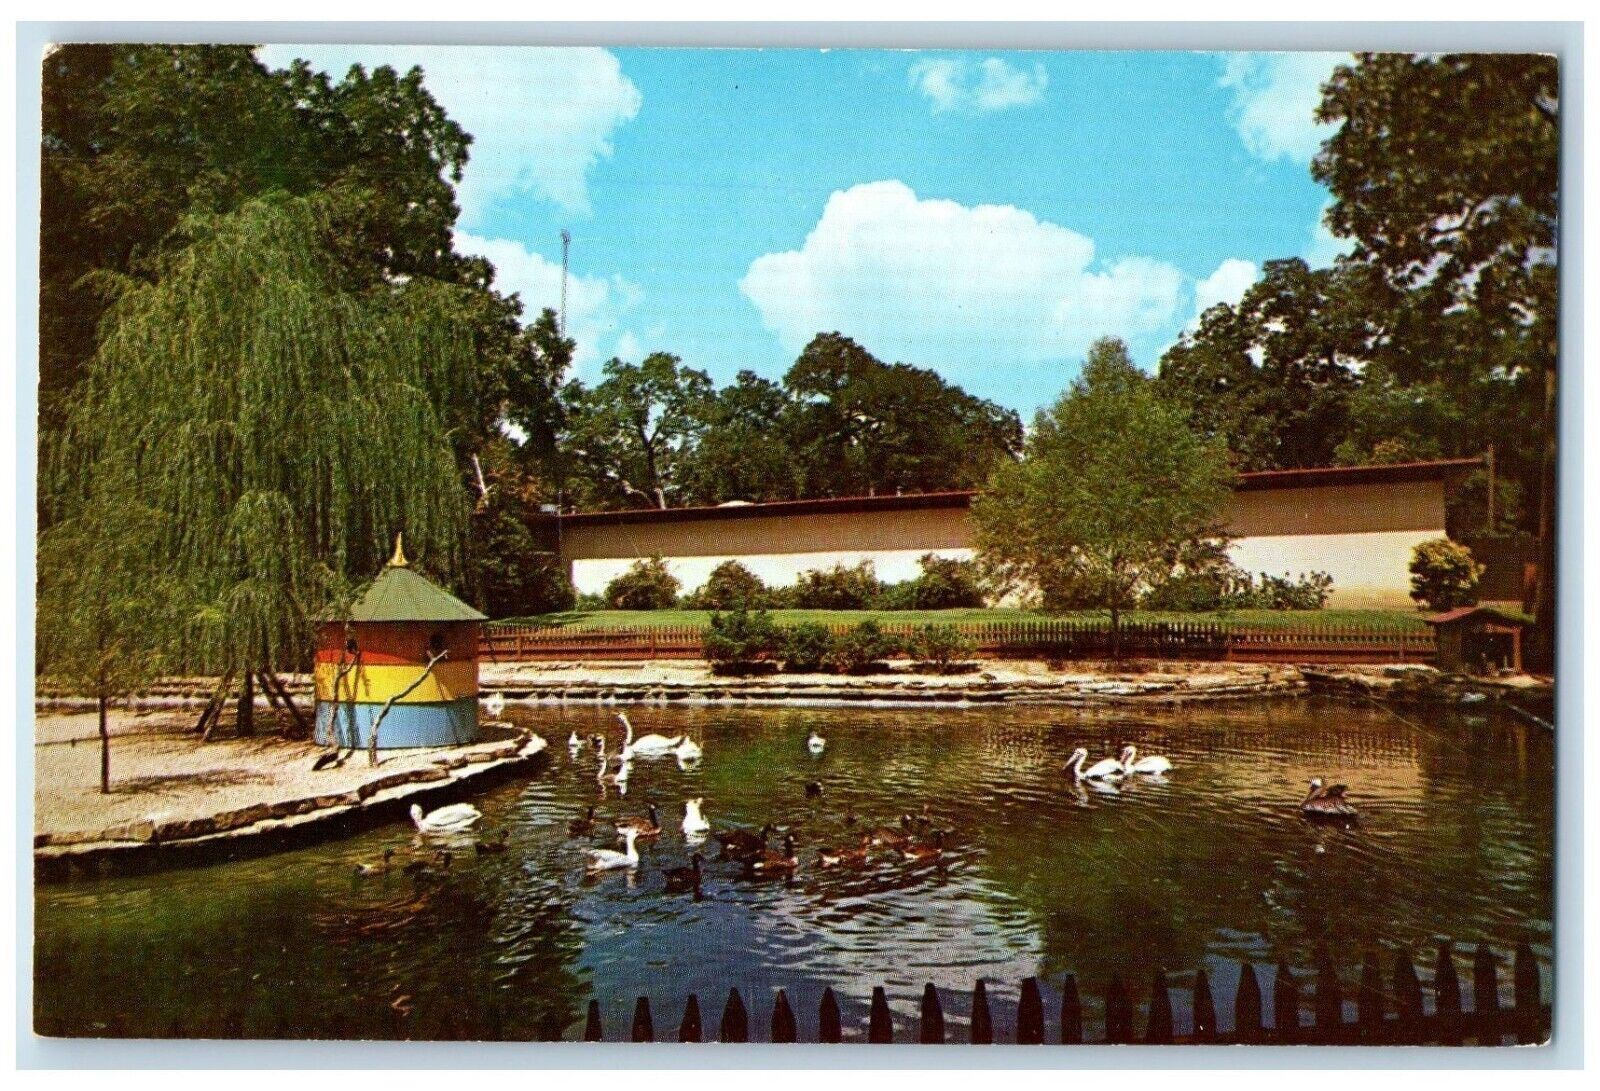 Forth Worth Zoological Park Waterfowl Lagoon Ducks Geese Swan Vintage Postcard